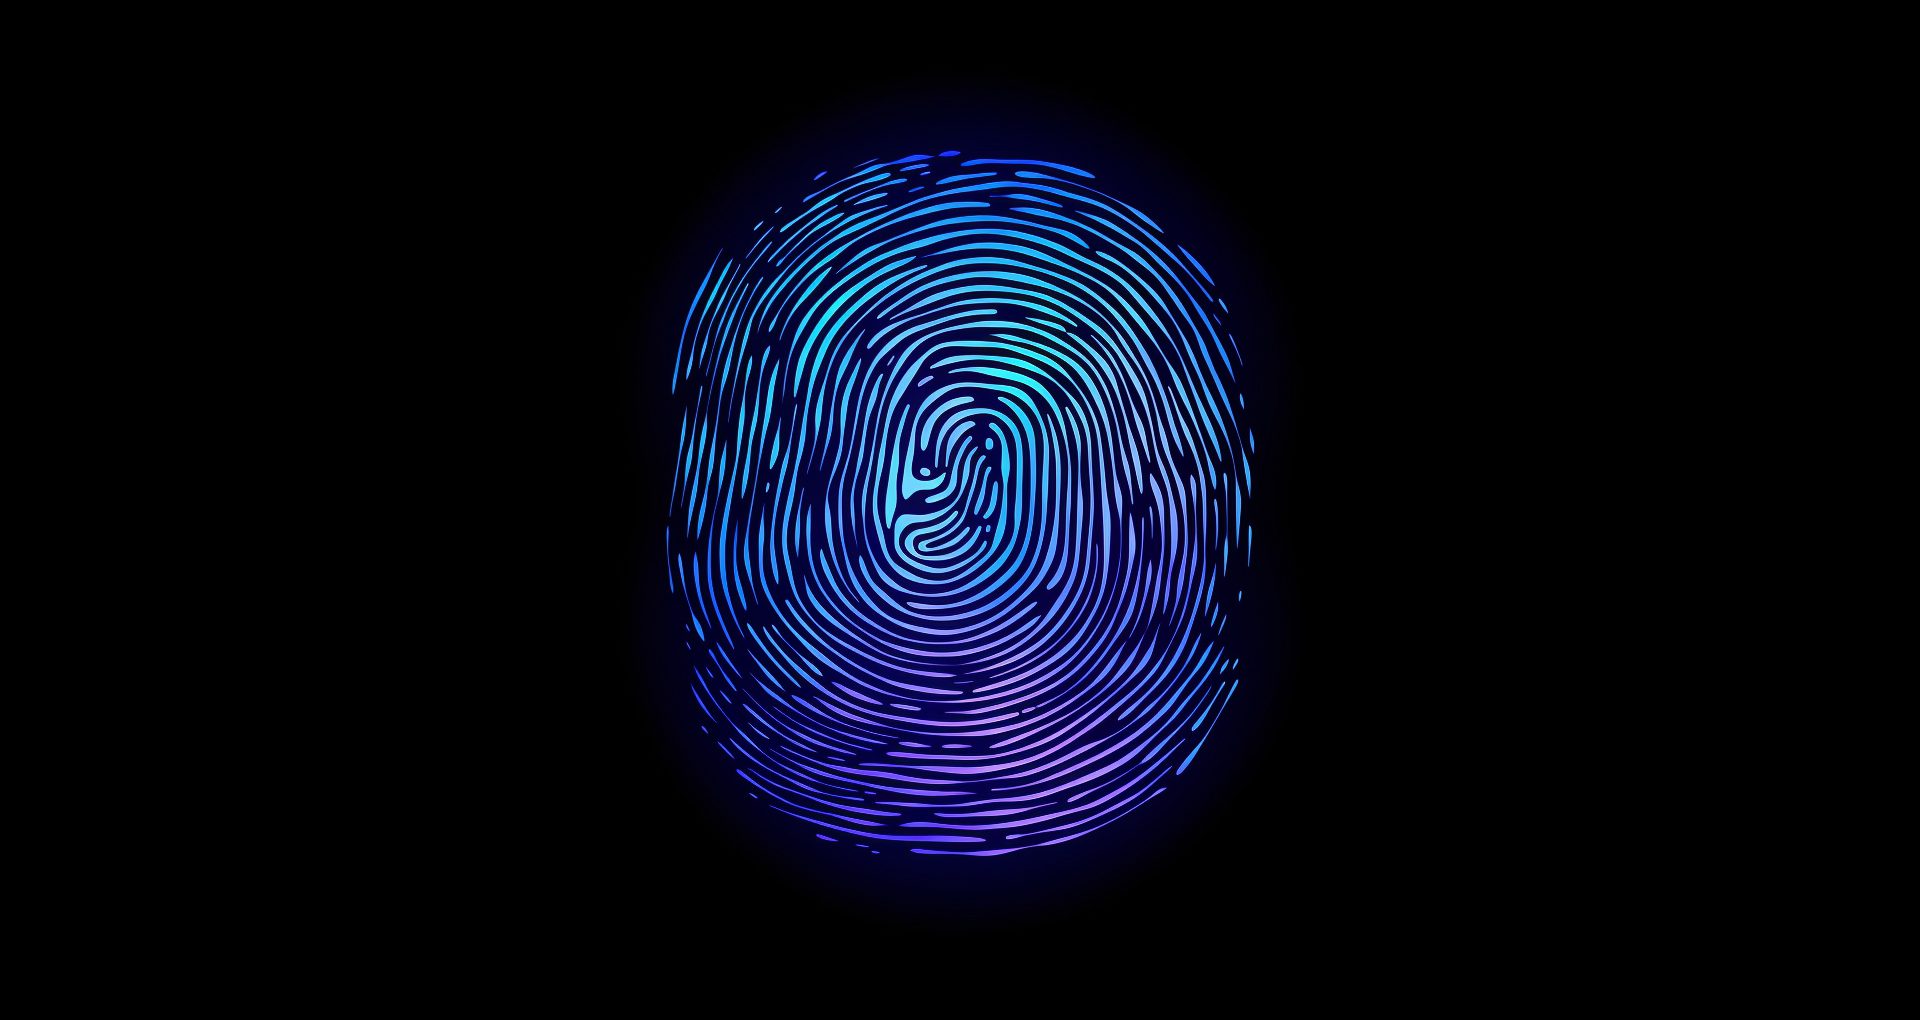 A digital fingerprint for biometric verification